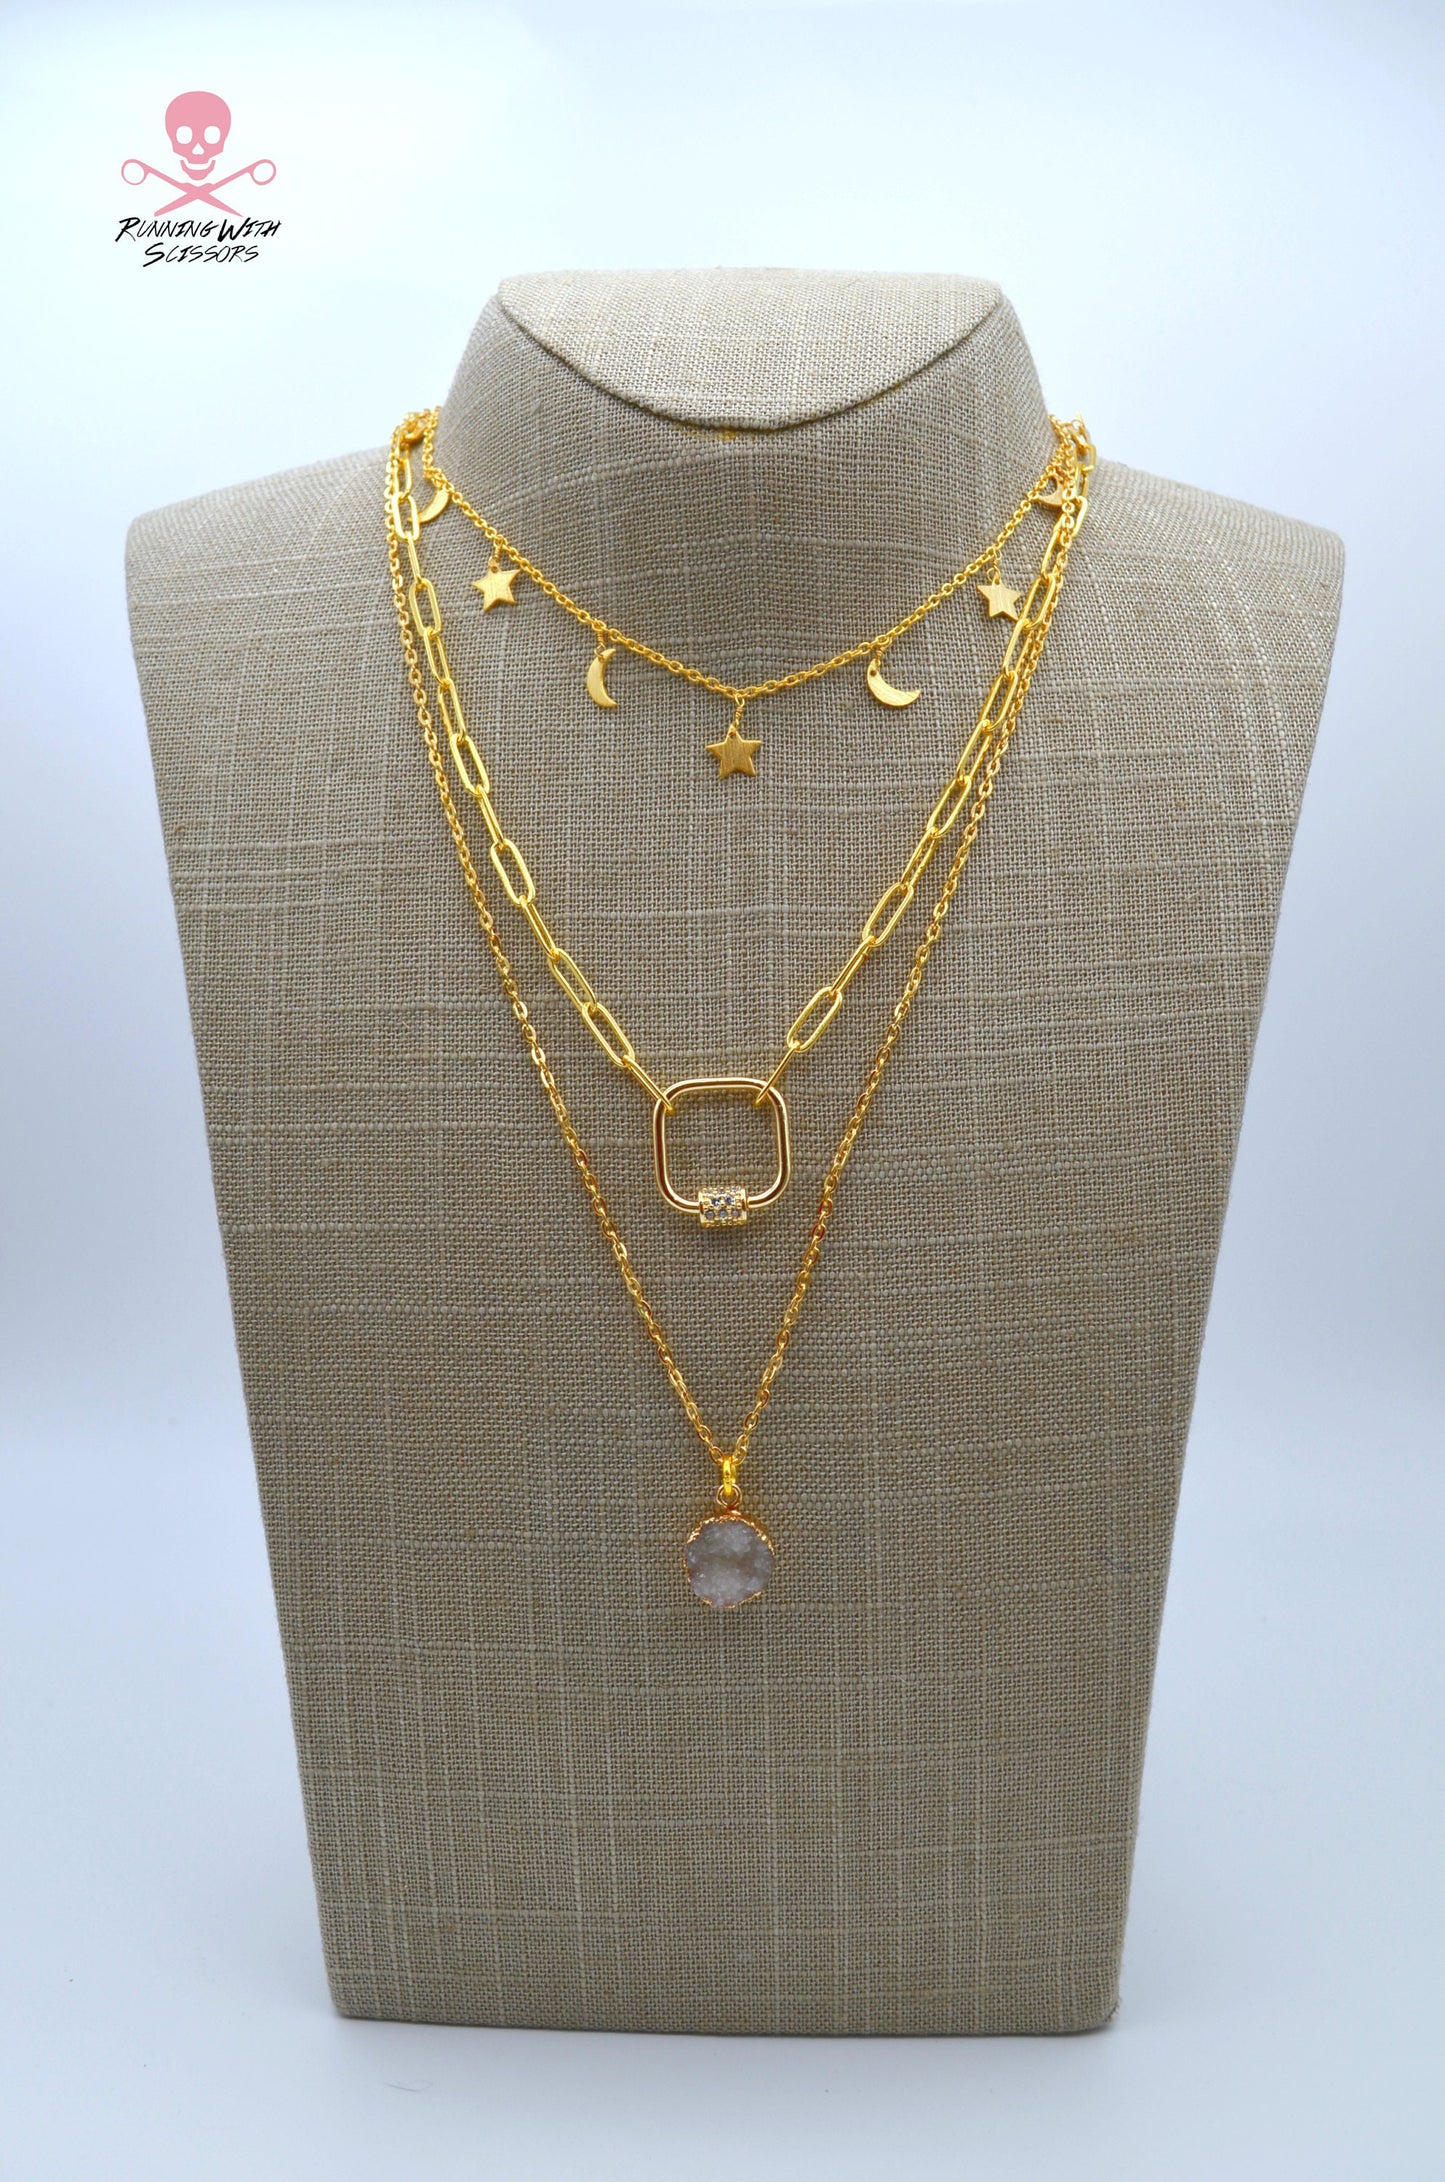 SALE Rose Quartz Celestial Layered Necklace - 2 Piece Layering Necklace